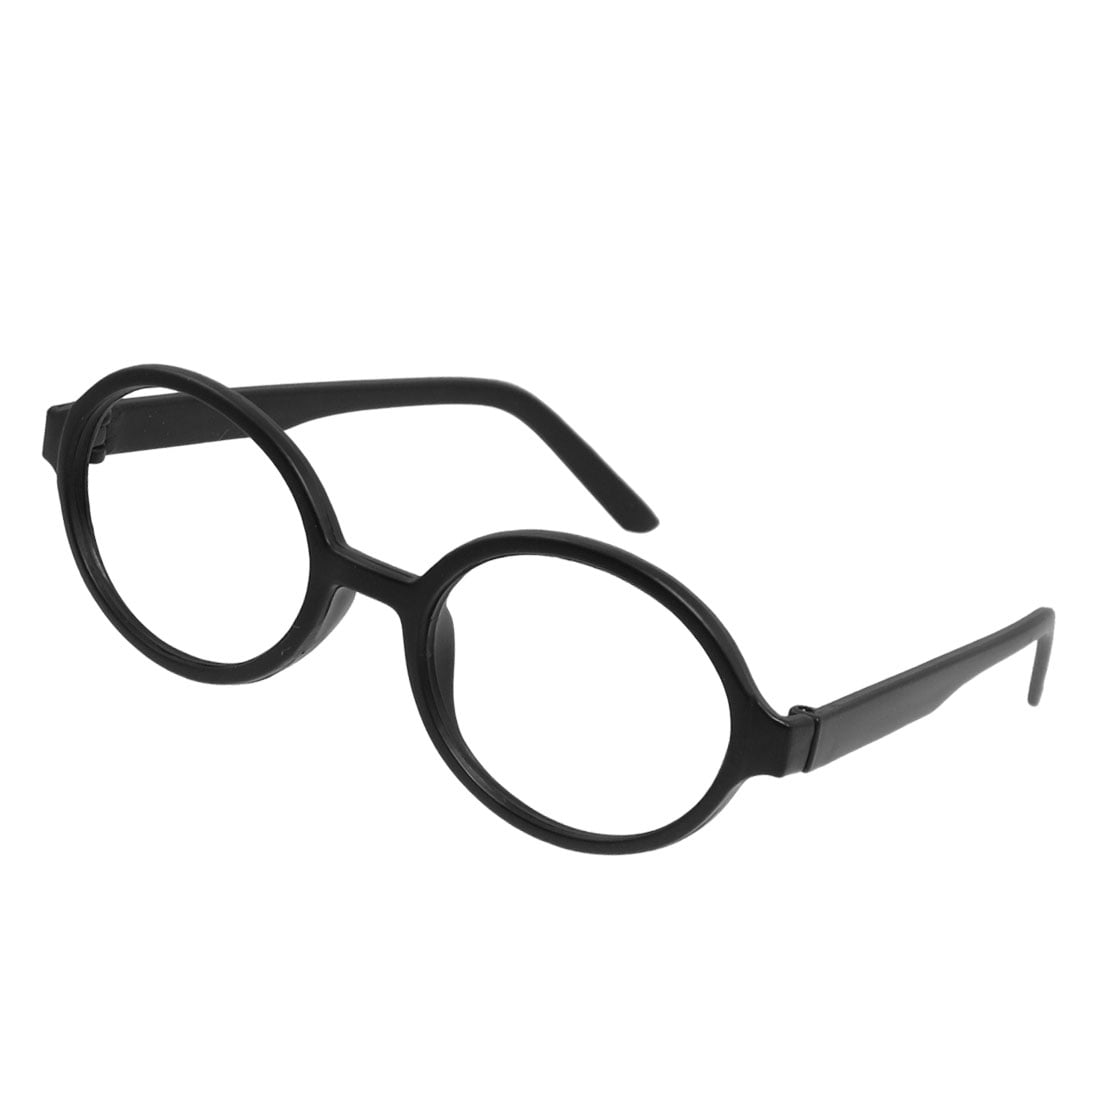 round black plastic glasses frames